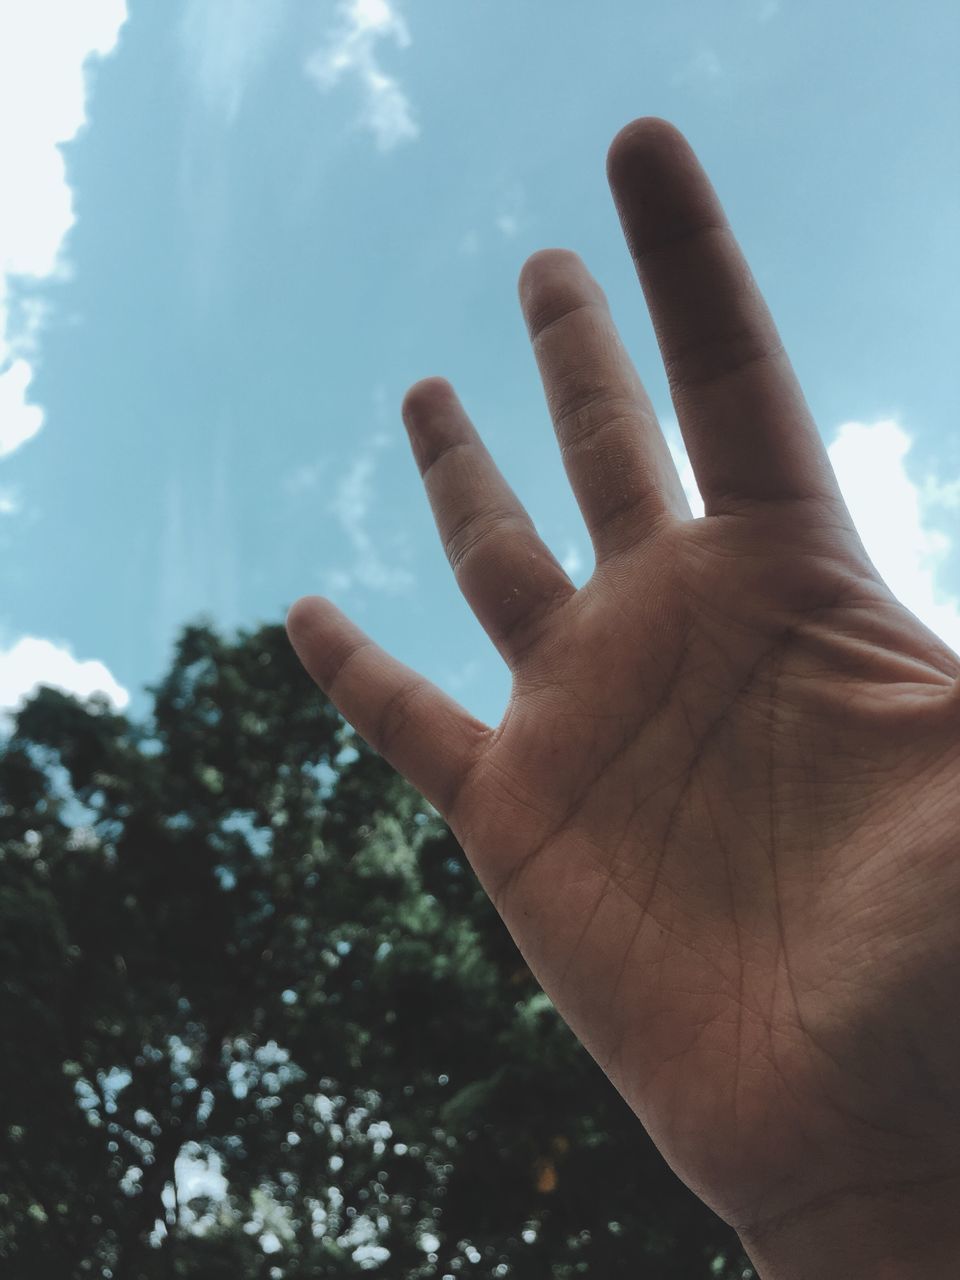 CLOSE-UP OF HUMAN HAND